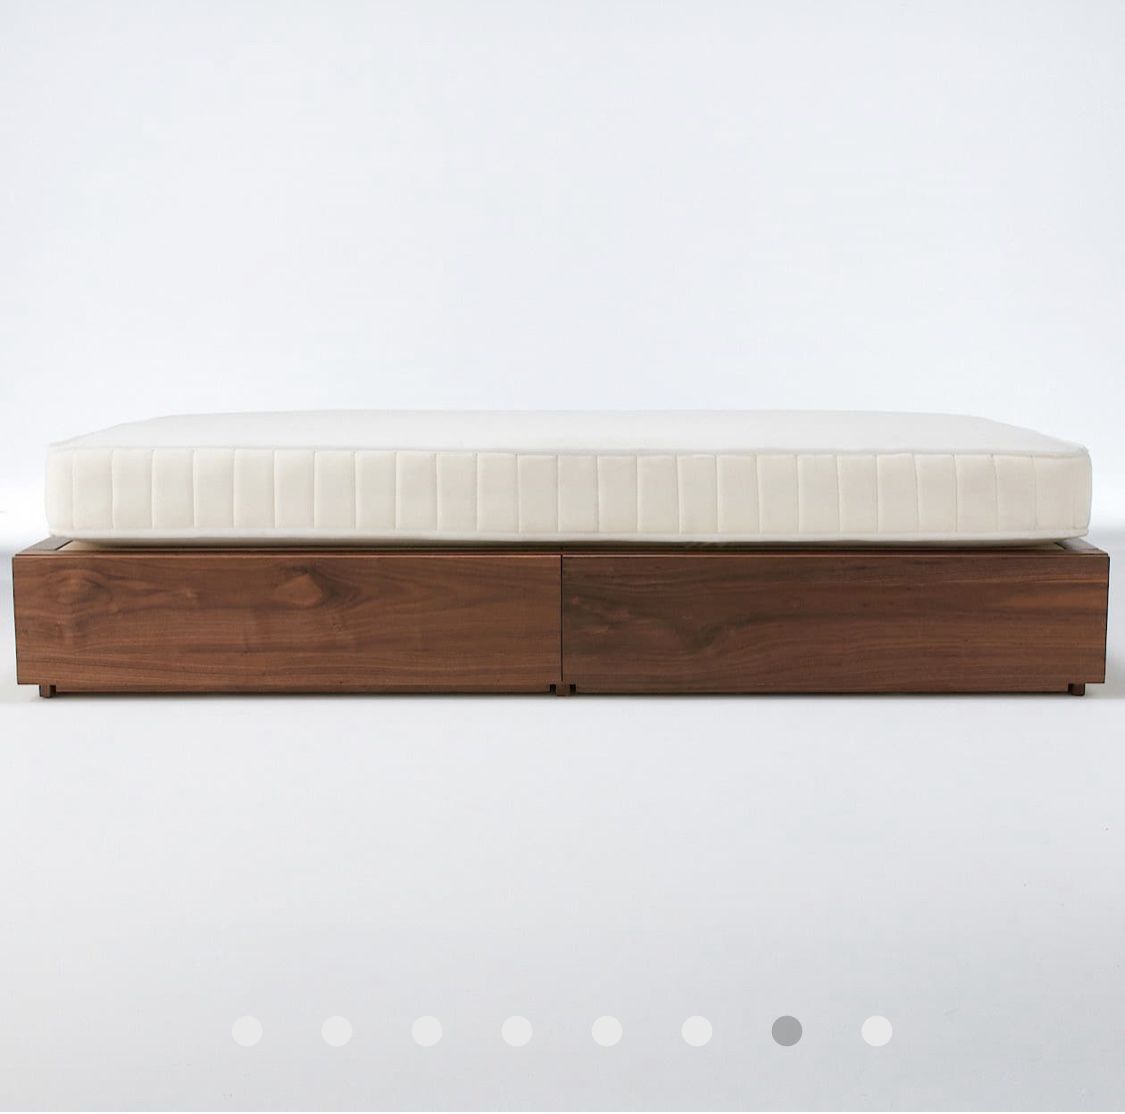 Japanese Brand MUJI Storage bed, double walnut material